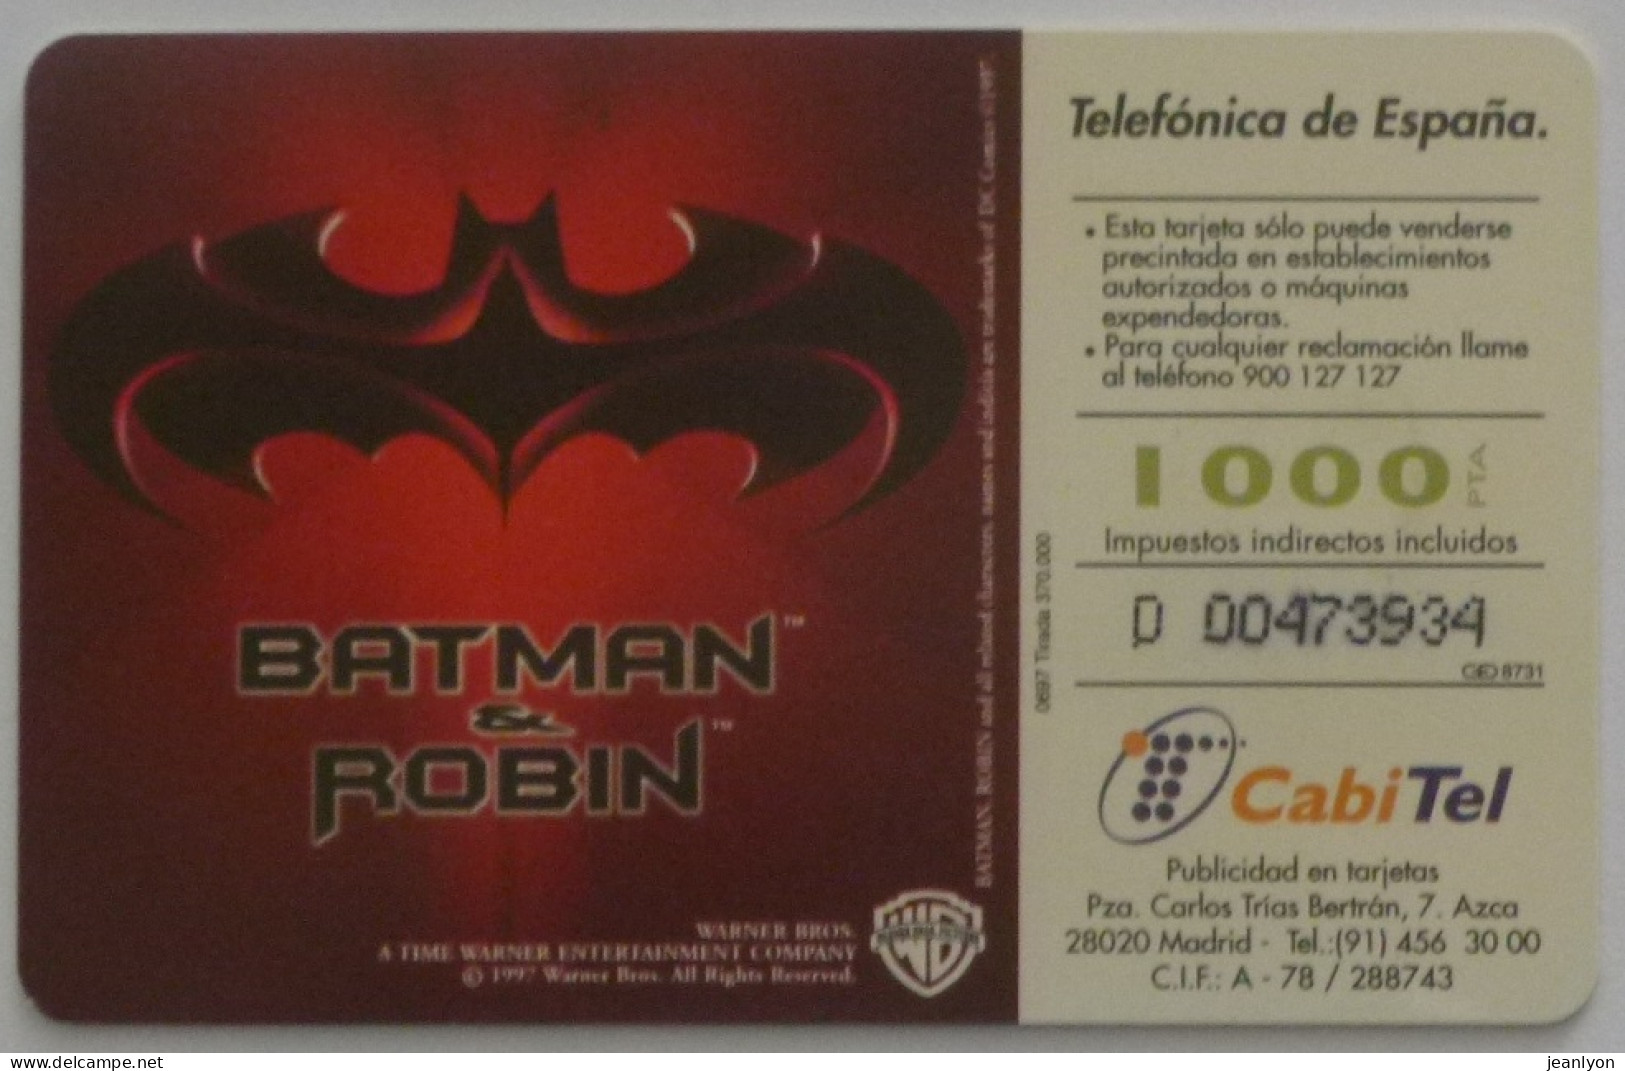 CINEMA - BATMAN ET ROBIN - Film Warner Bros - Carte Téléphone Espagne 1000 Utilisée - Film